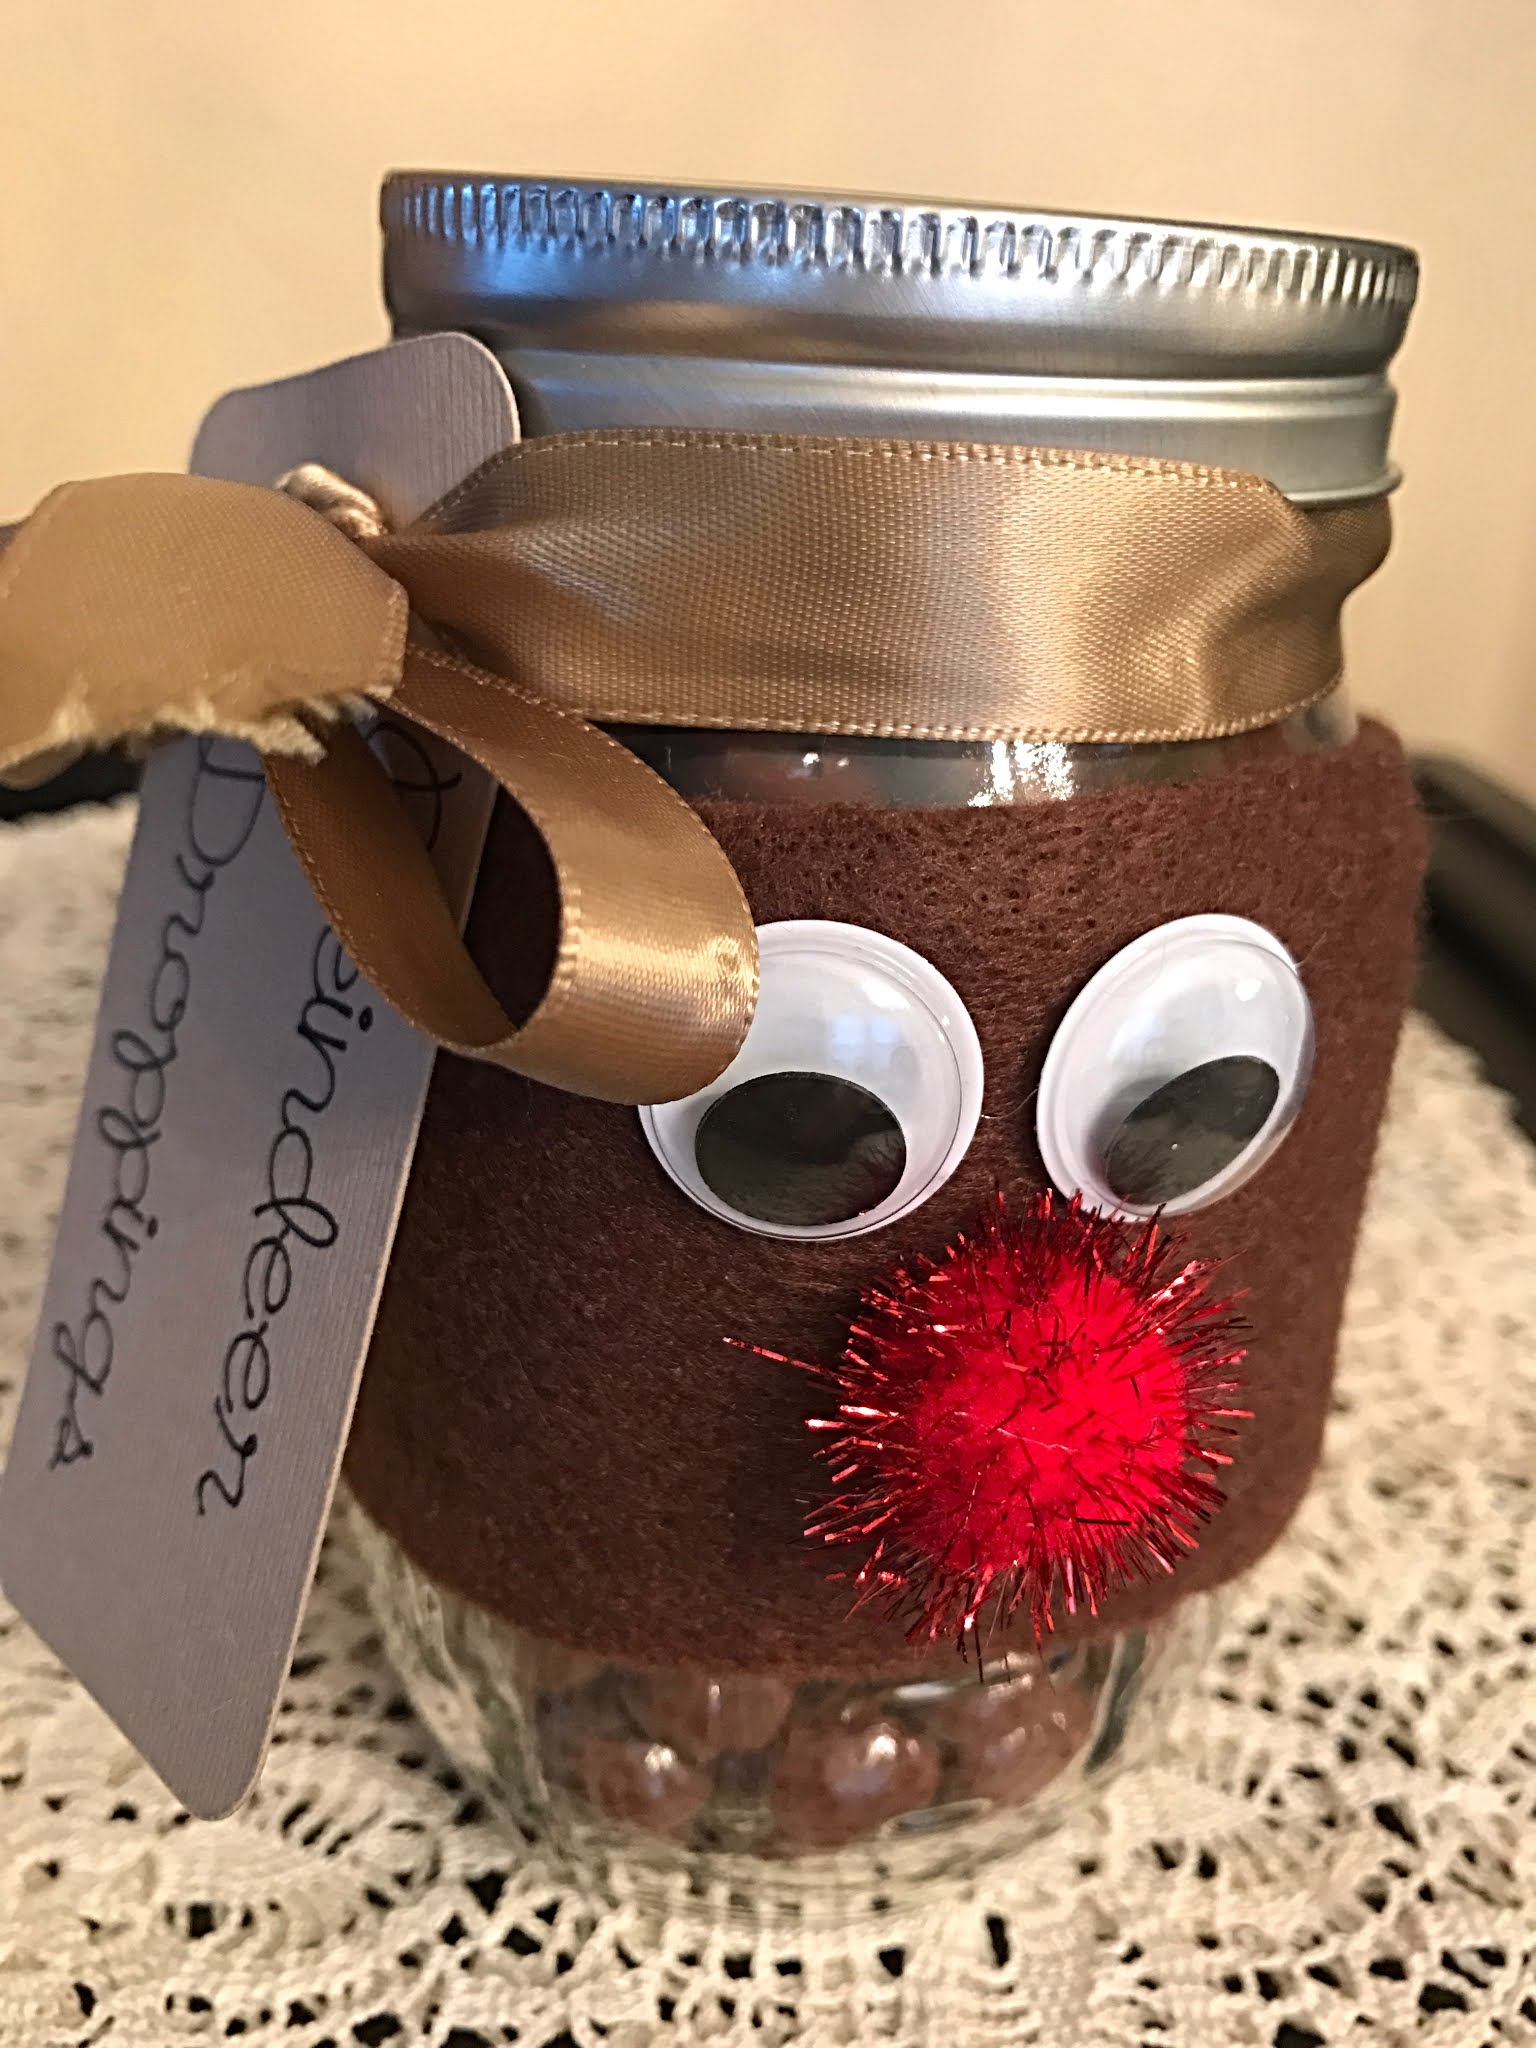 35 DIY Mason Jar Gift Ideas - Homemade Gifts in Mason Jars